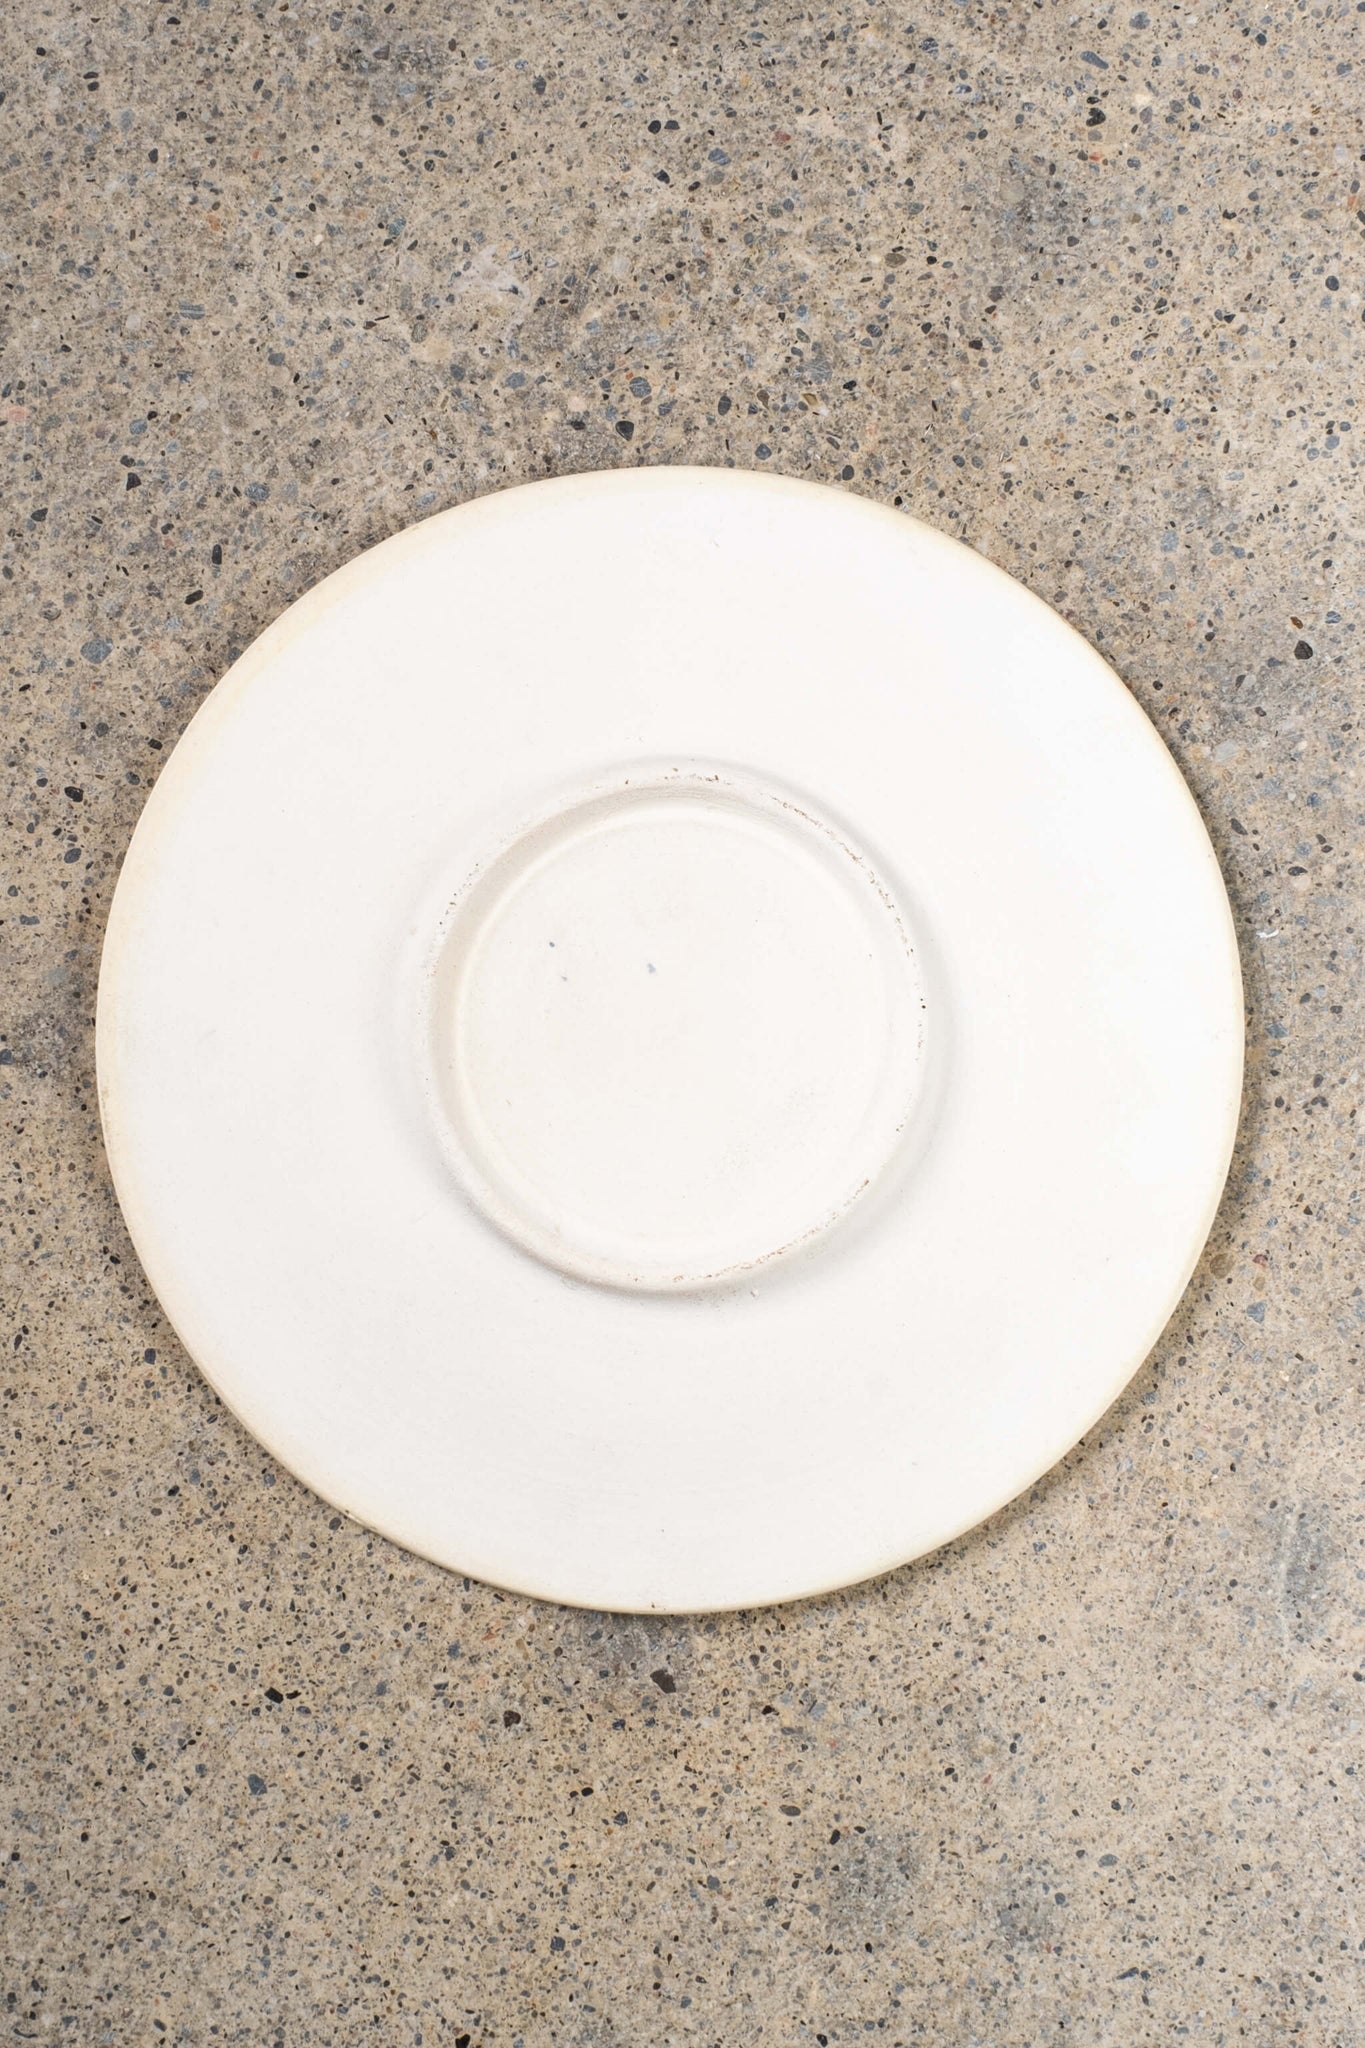 Vintage Ceramic Glaze Testing Plate No. 2, underside